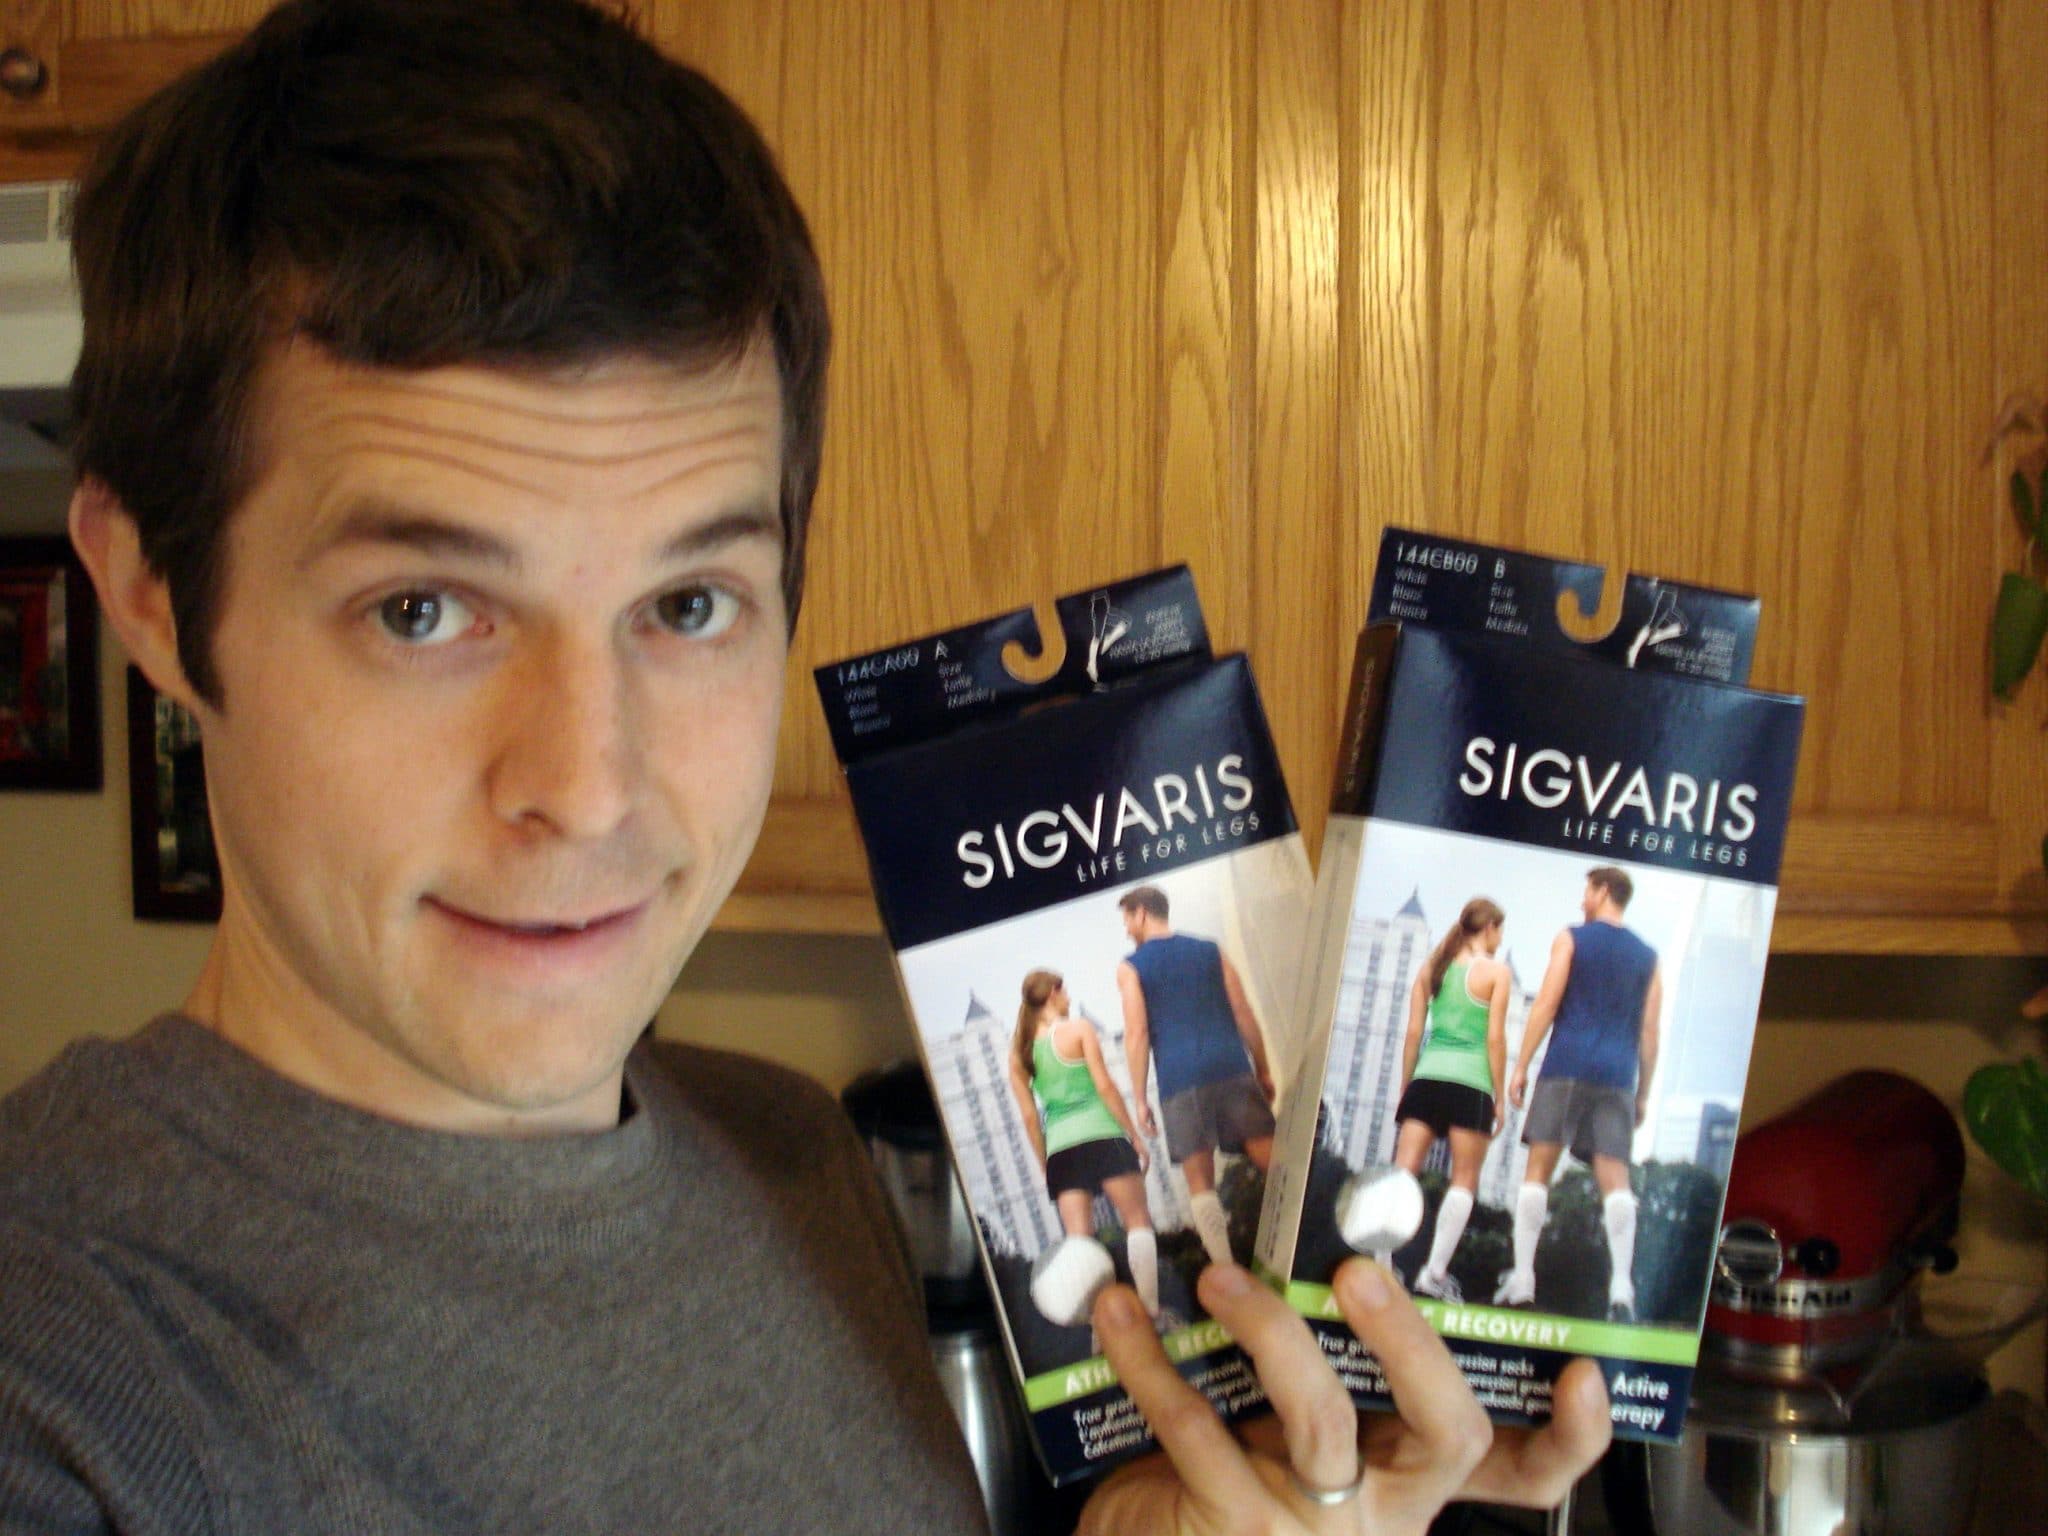 Matt holding 2 boxes of SIGVARIS compression socks